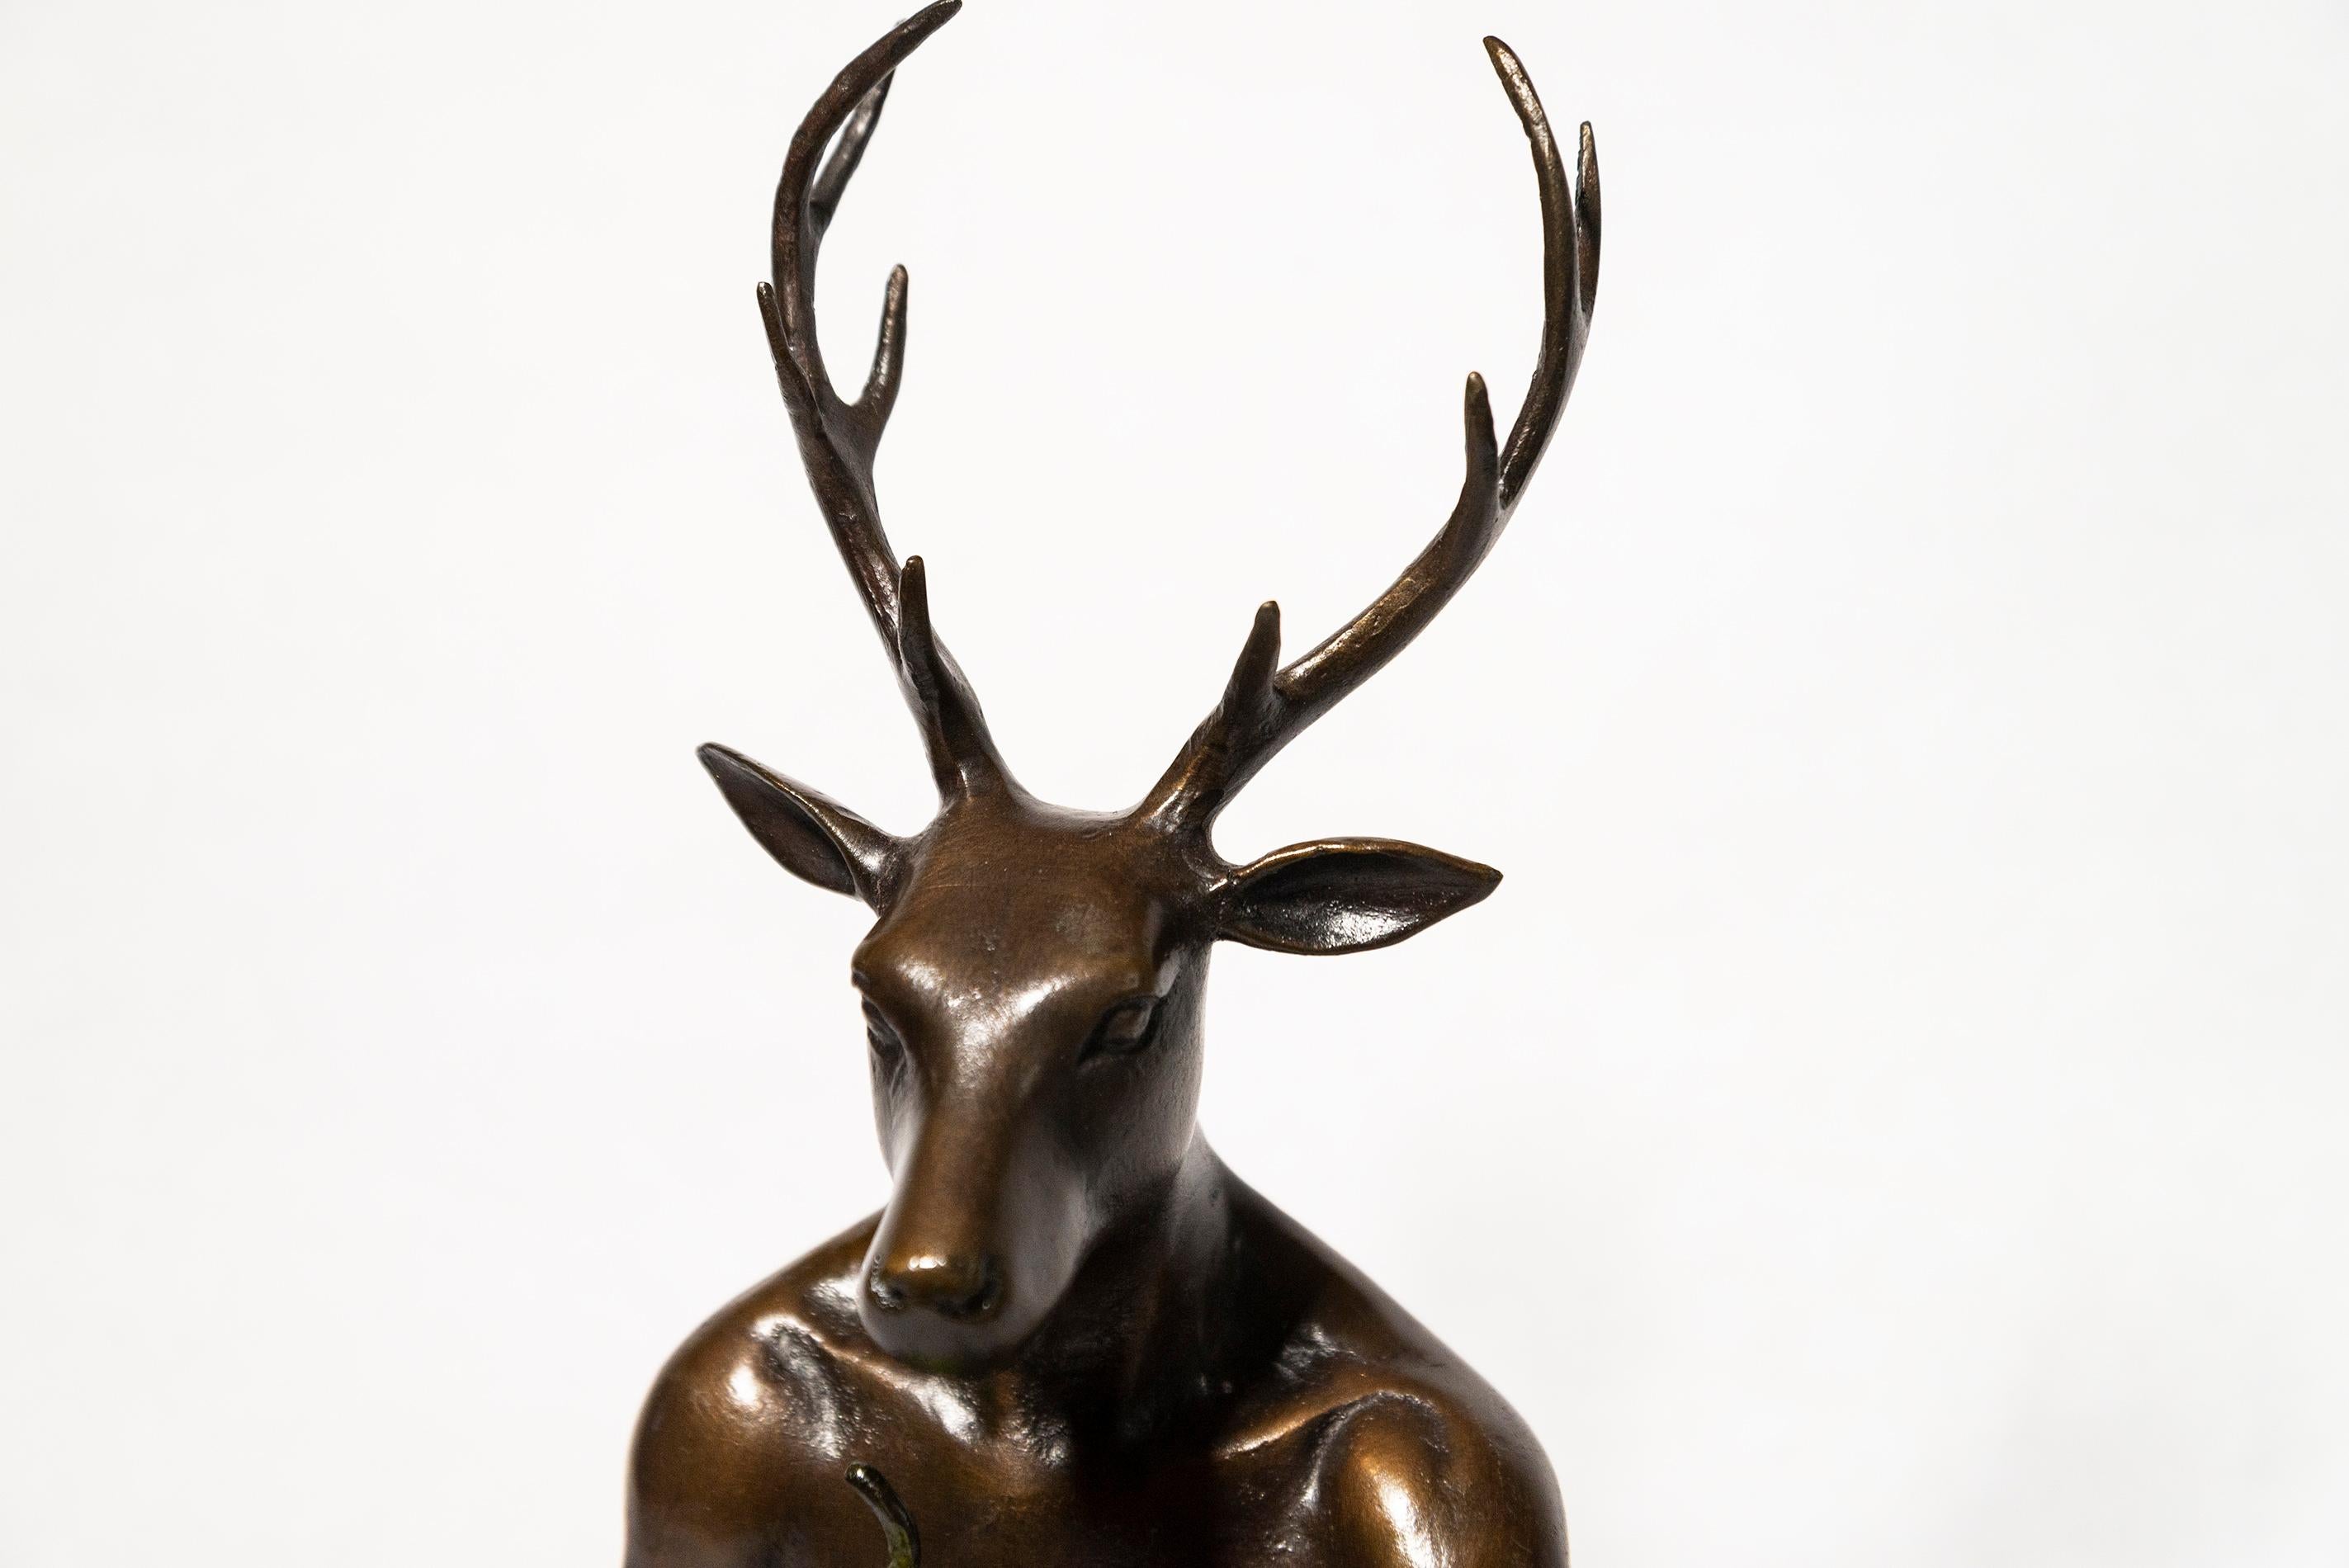 Deerman grew a pear 19/25 - figurative, playful, contemporary, bronze sculpture 1